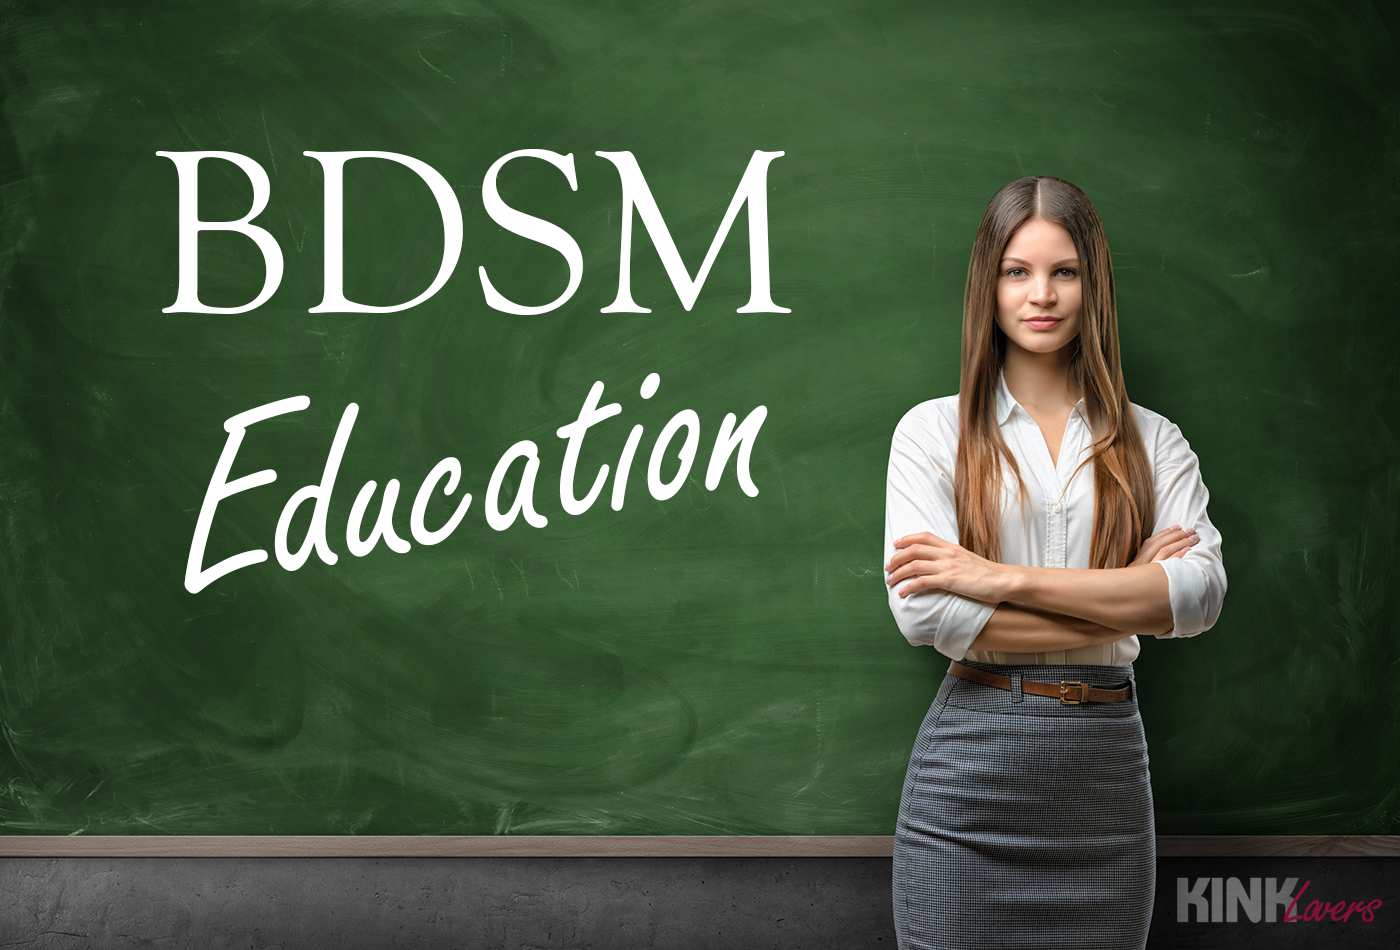 BDSM Education